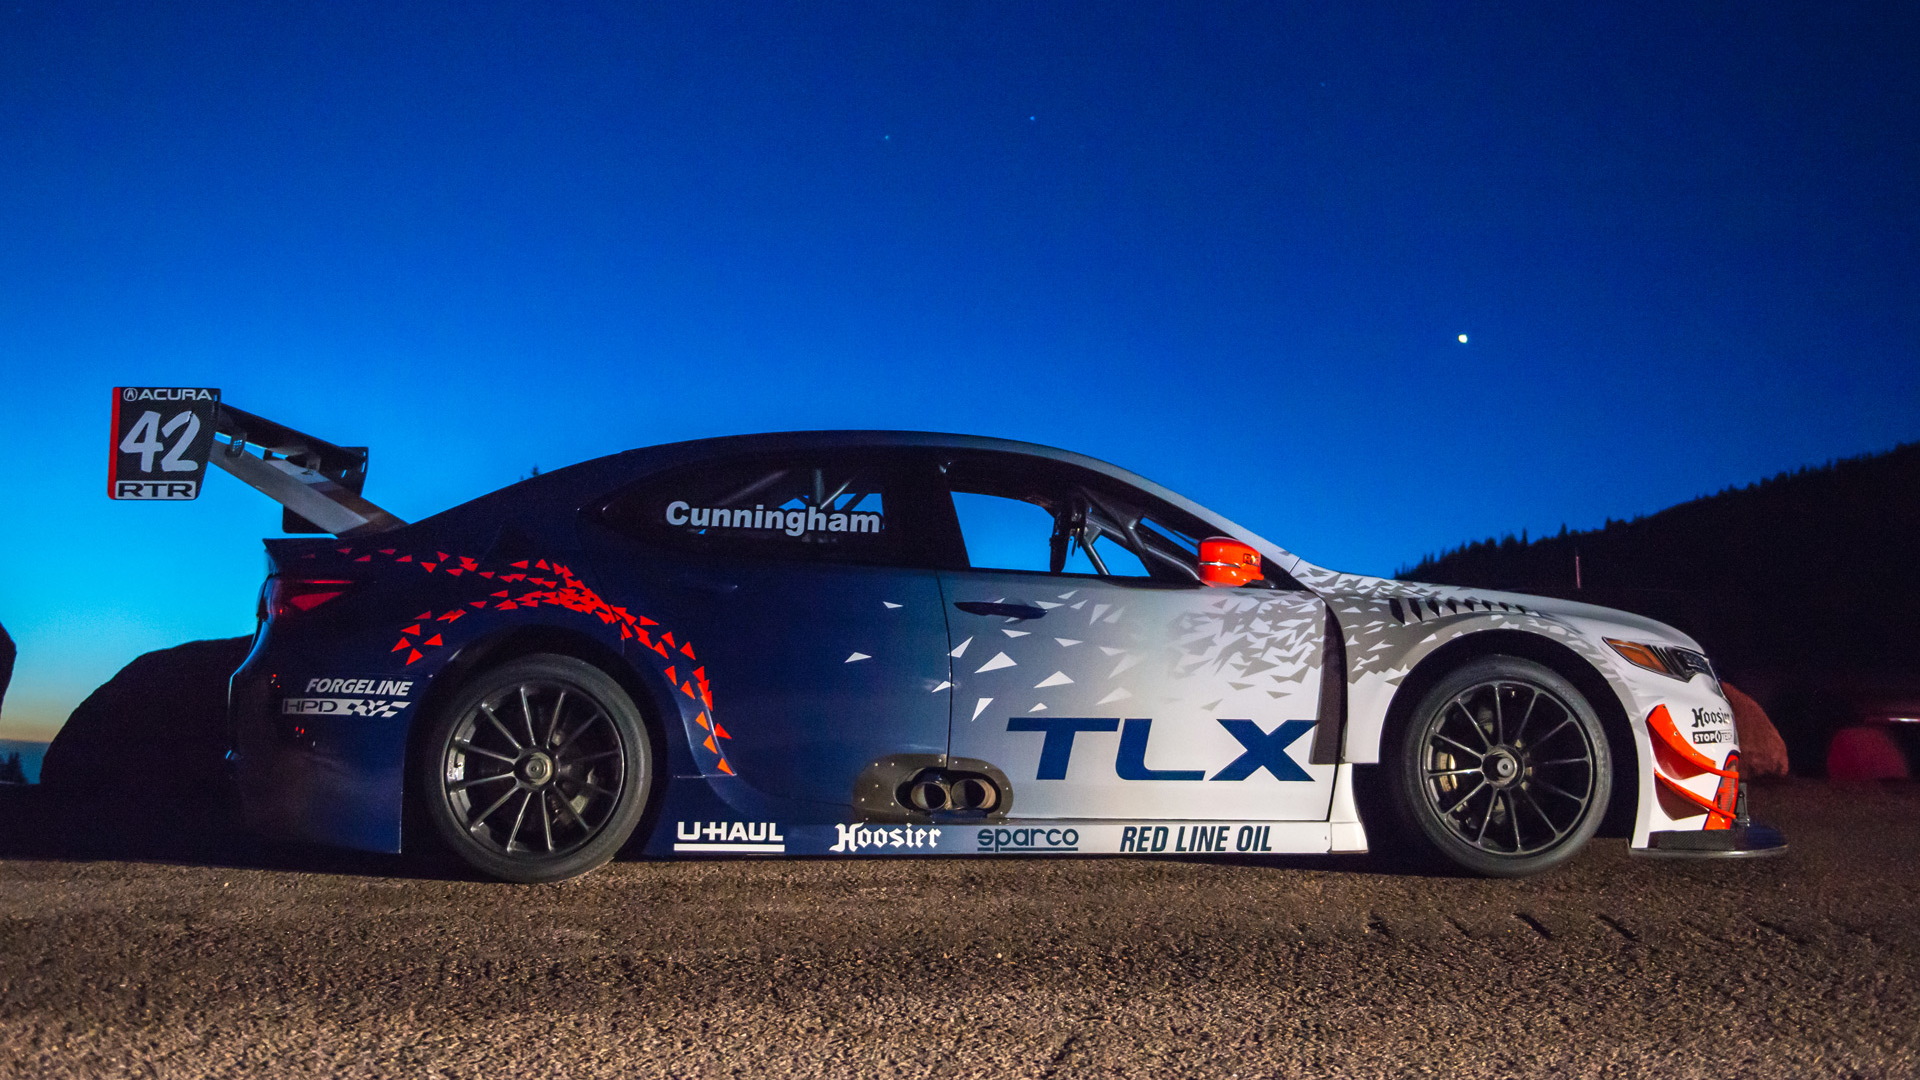 2017 Acura TLX GT race car set for 2017 Pikes Peak International Hill Climb